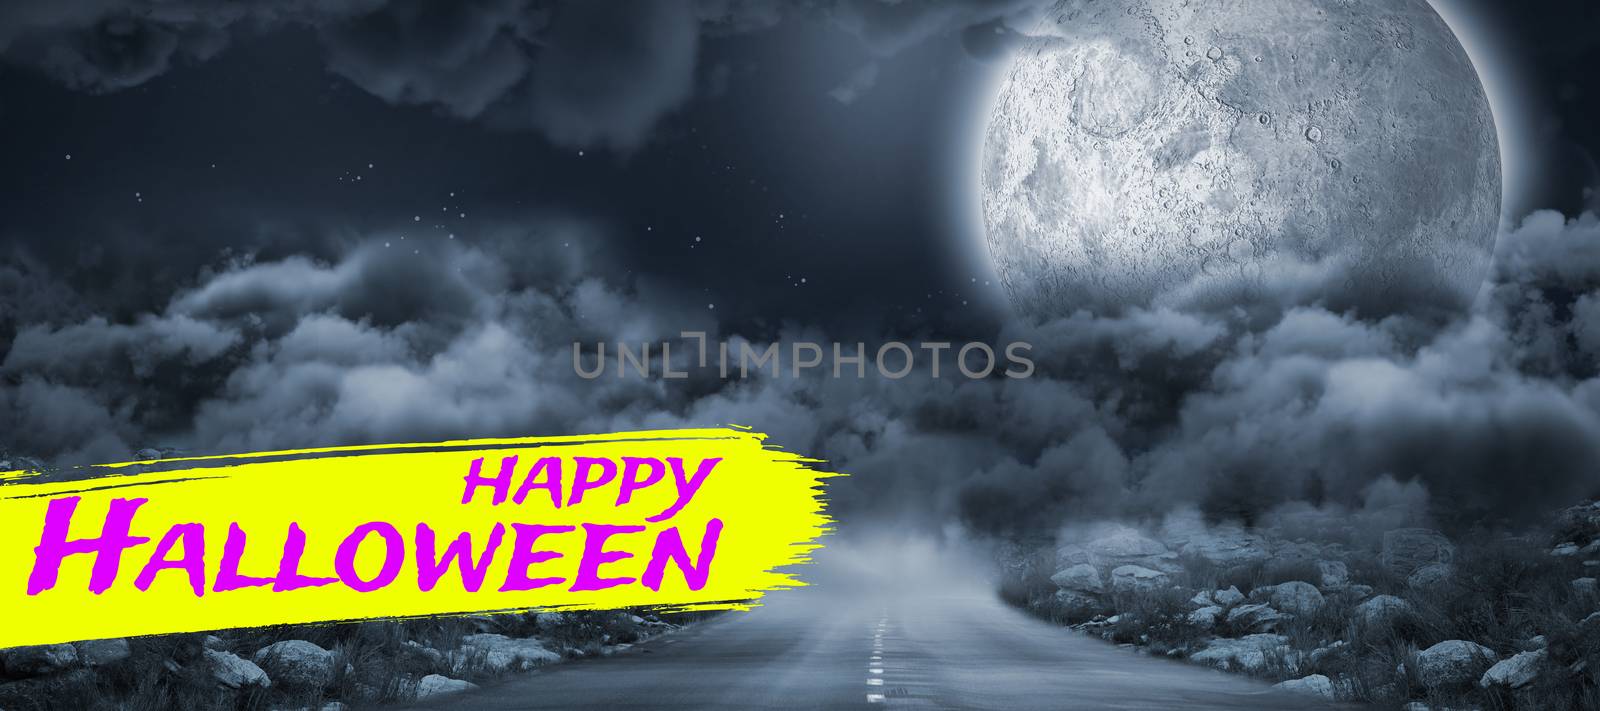 Composite image of digital image of happy halloween text by Wavebreakmedia